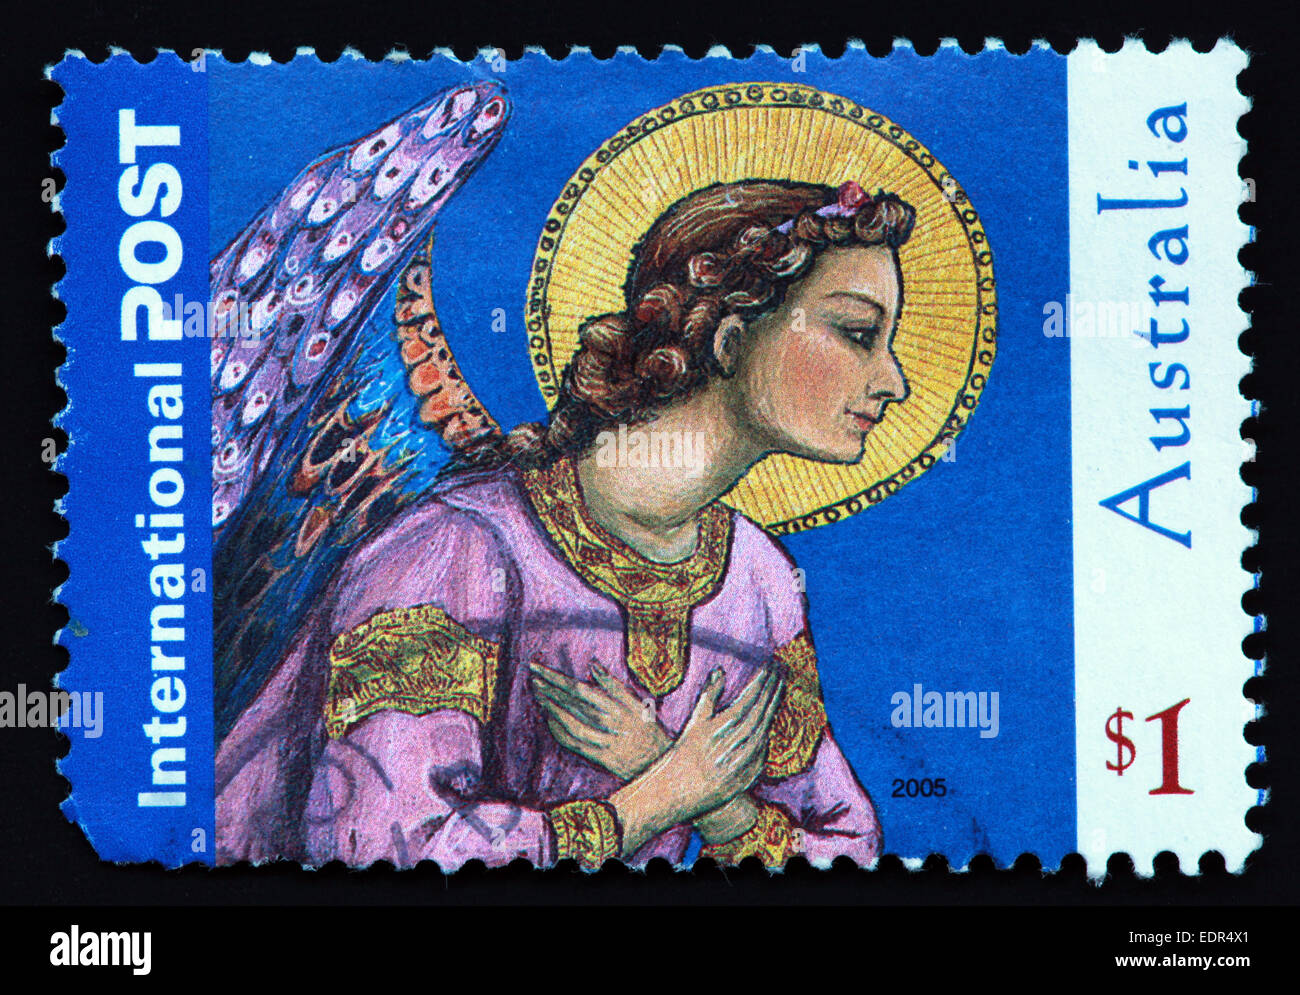 Used and postmarked Australia / Austrailian Stamp International Post $1 2005 Stock Photo